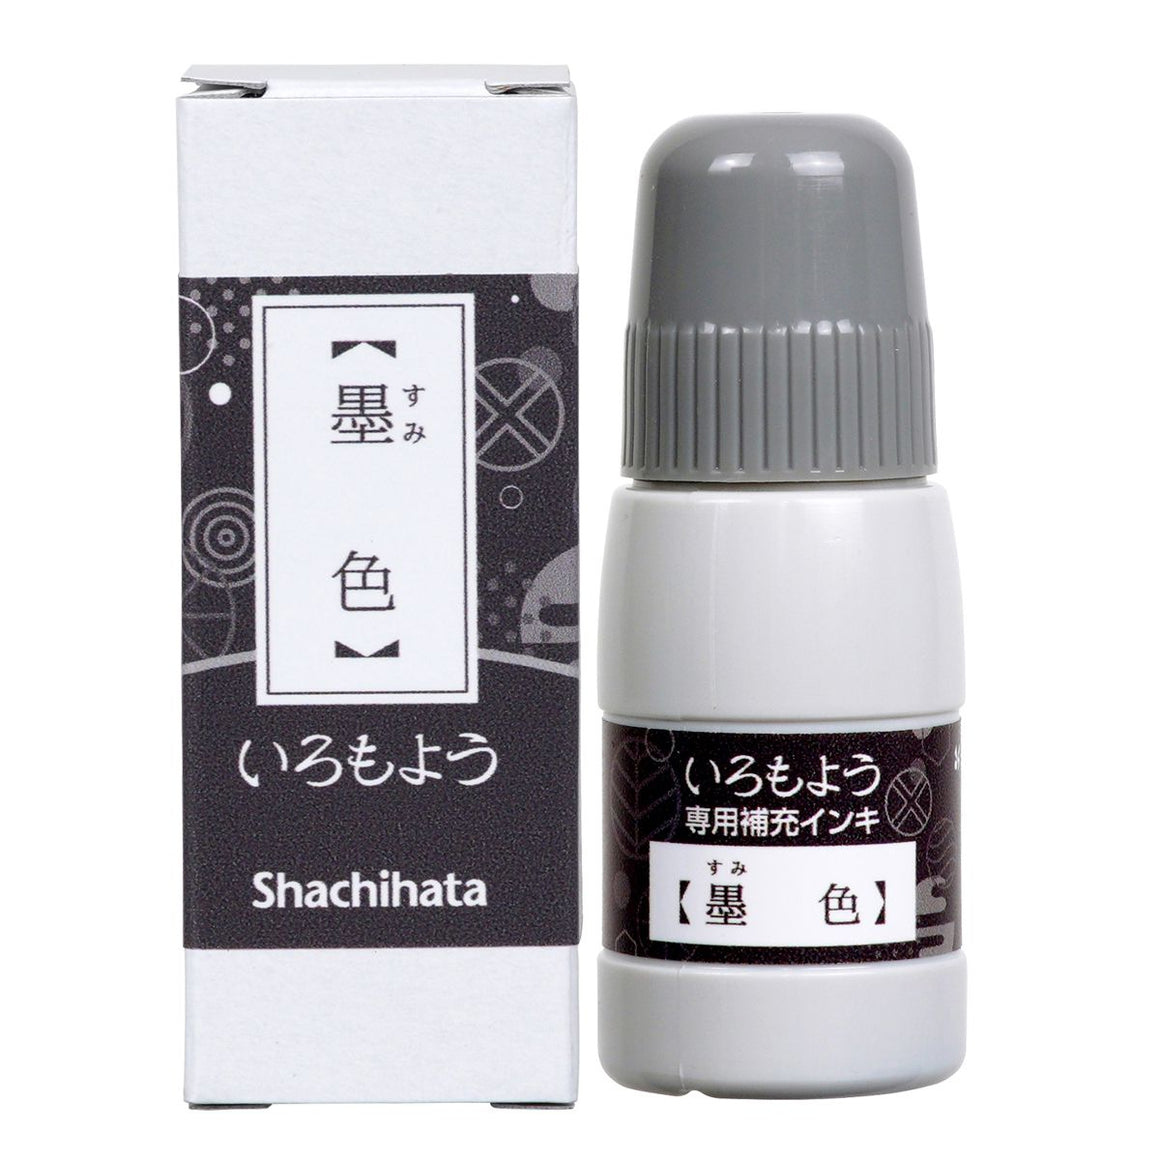 REFILL: Shachihata Iromoyo Ink Refill Bottle - Black - Sumi-iro 墨色 - SAC-20-K